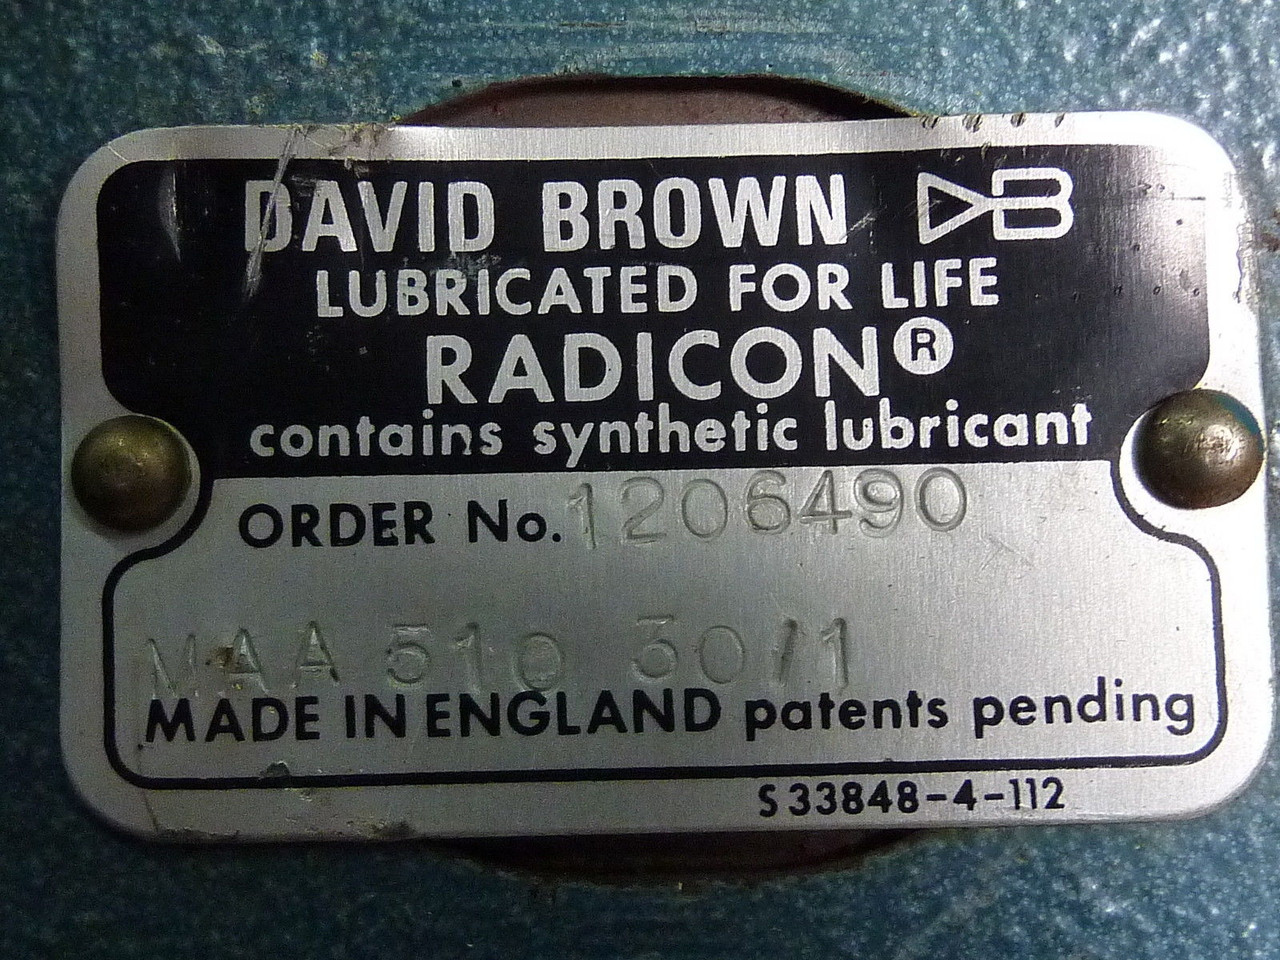 David Brown Radicon 1206490 Gear Reducer MAA510 30:1 USED